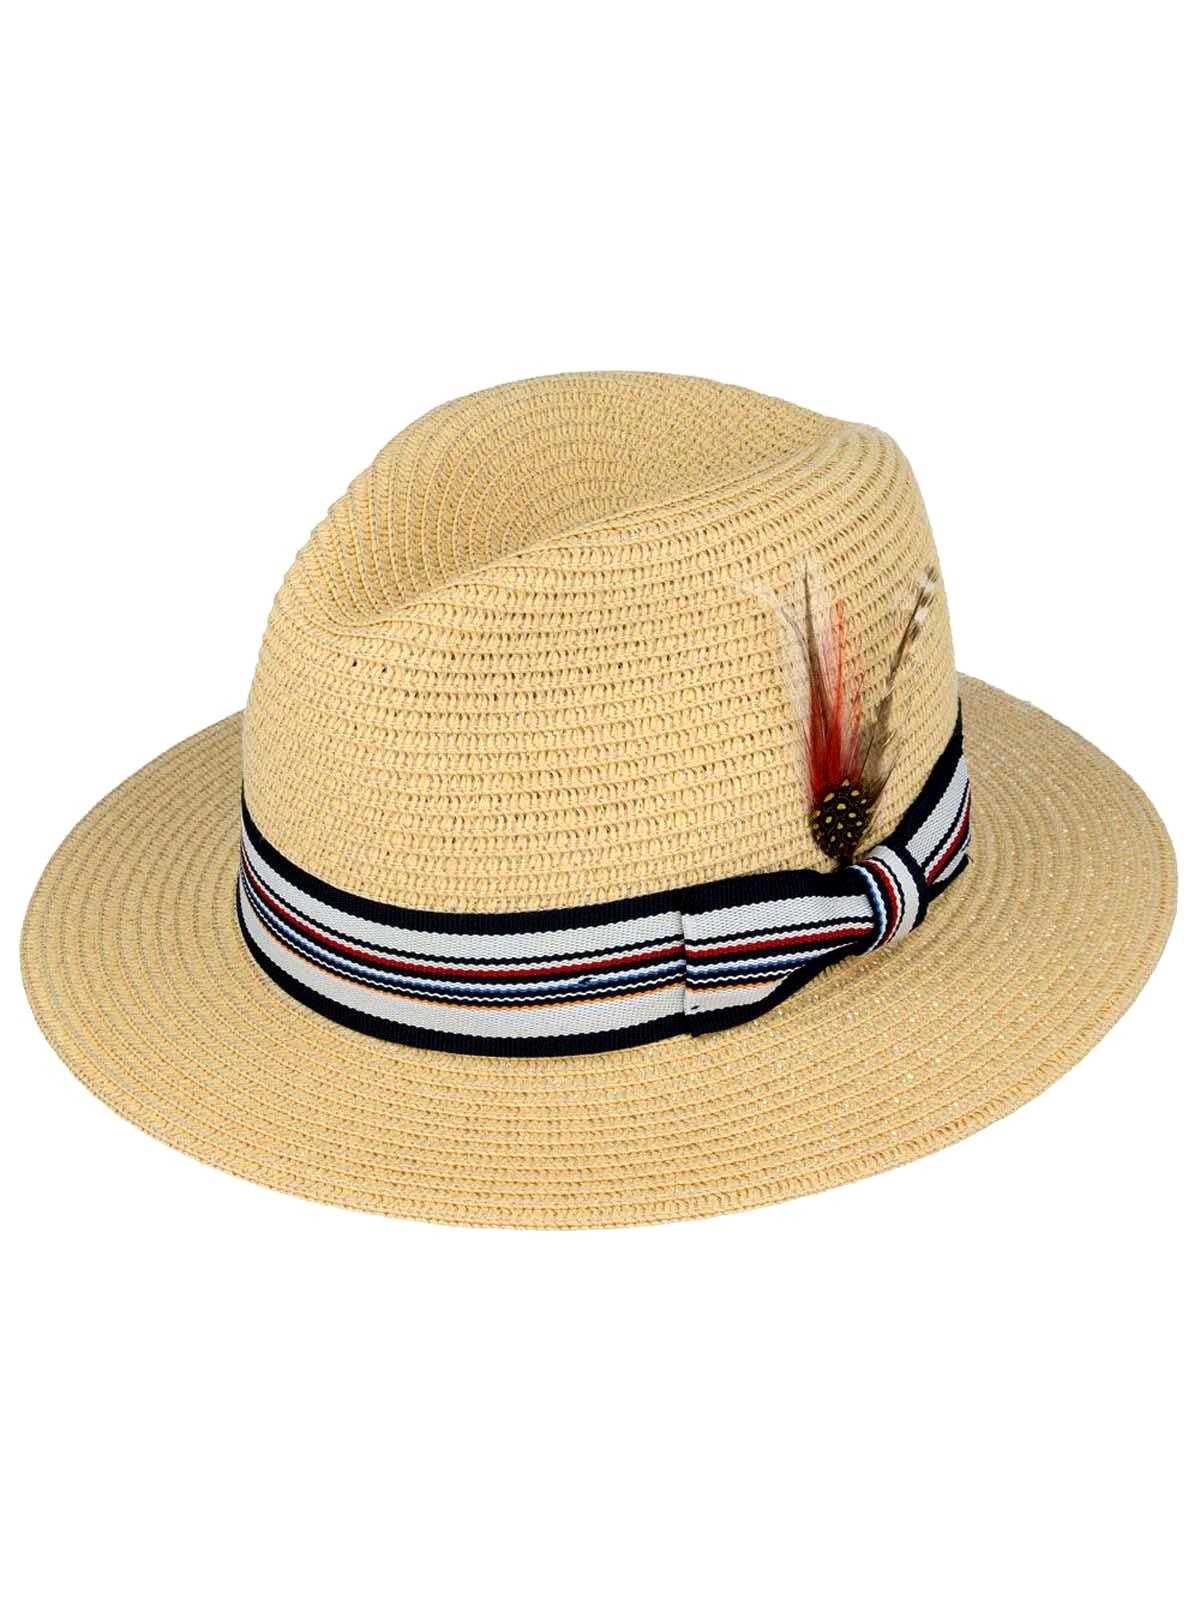 Vintage Straw Hats for Men -  Denmark